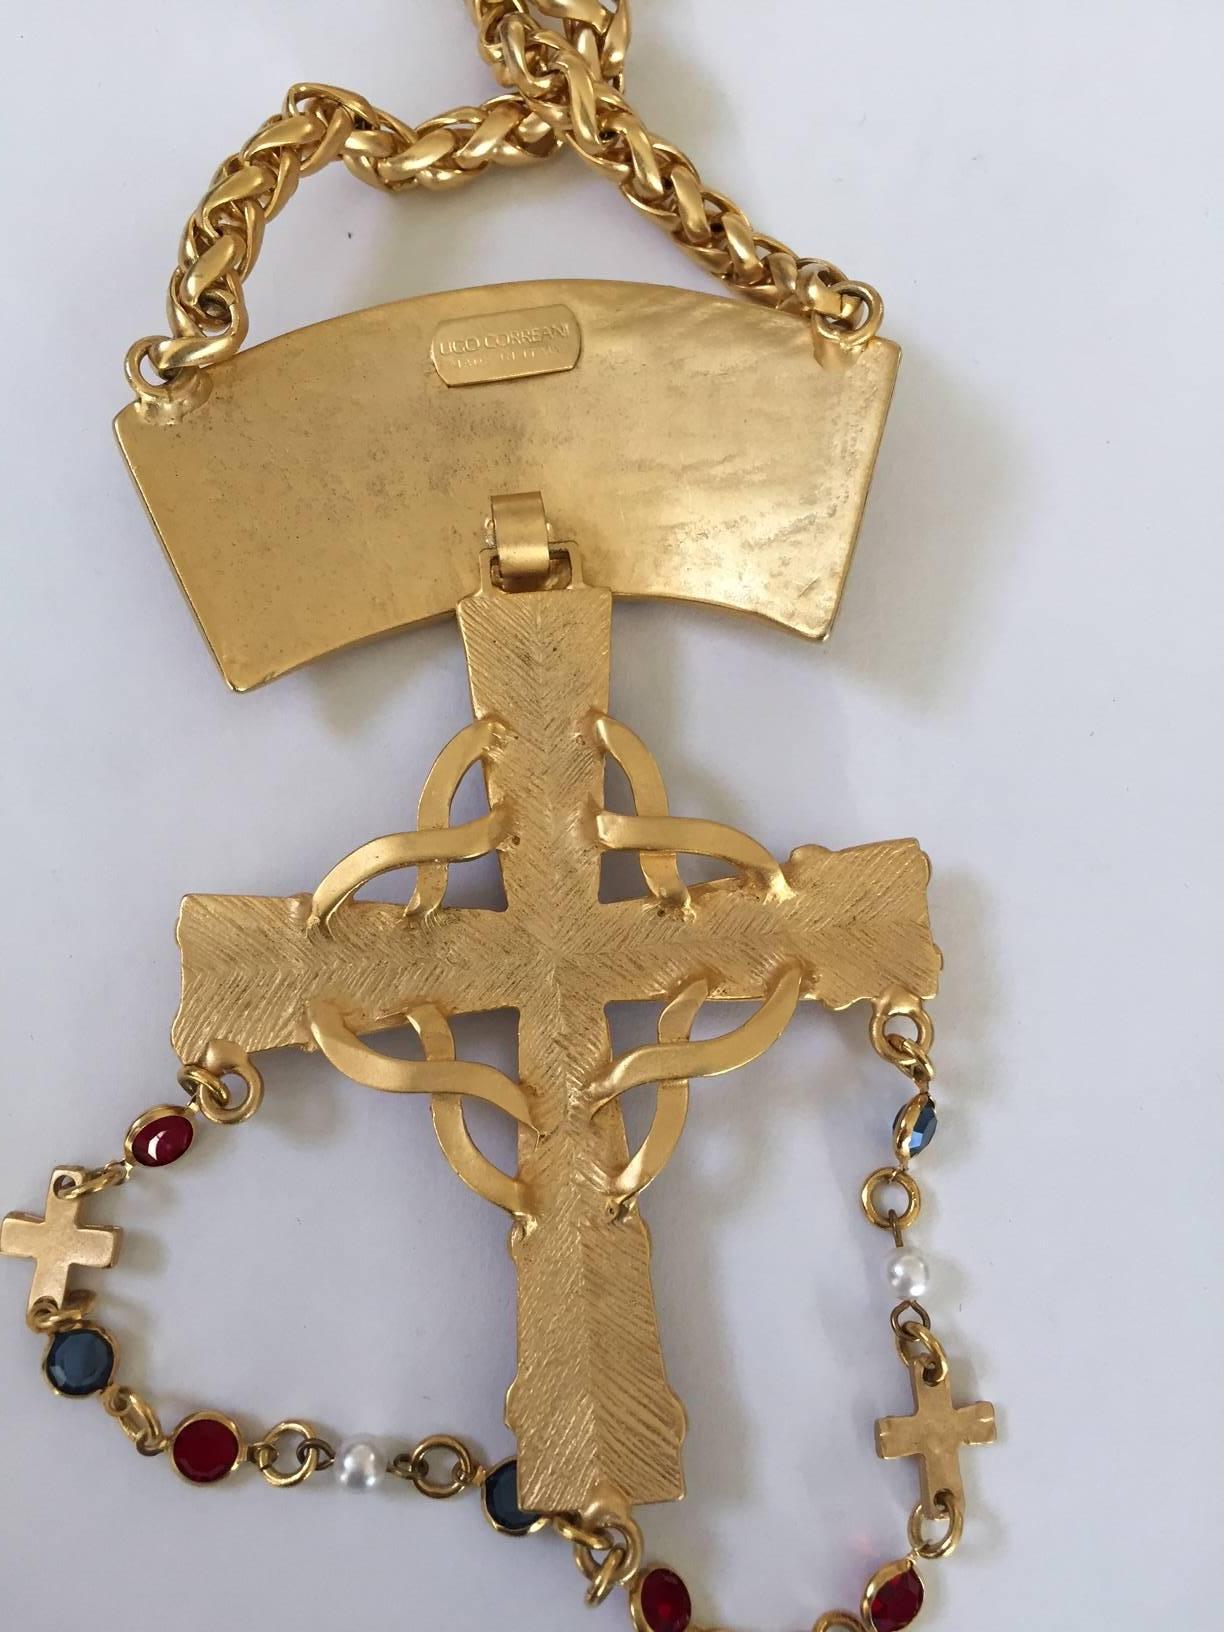 Beautiful Ugo Correani cross pendant chain necklace designed for late Gianni Versace. cut glass stones.
Measurement: 
30